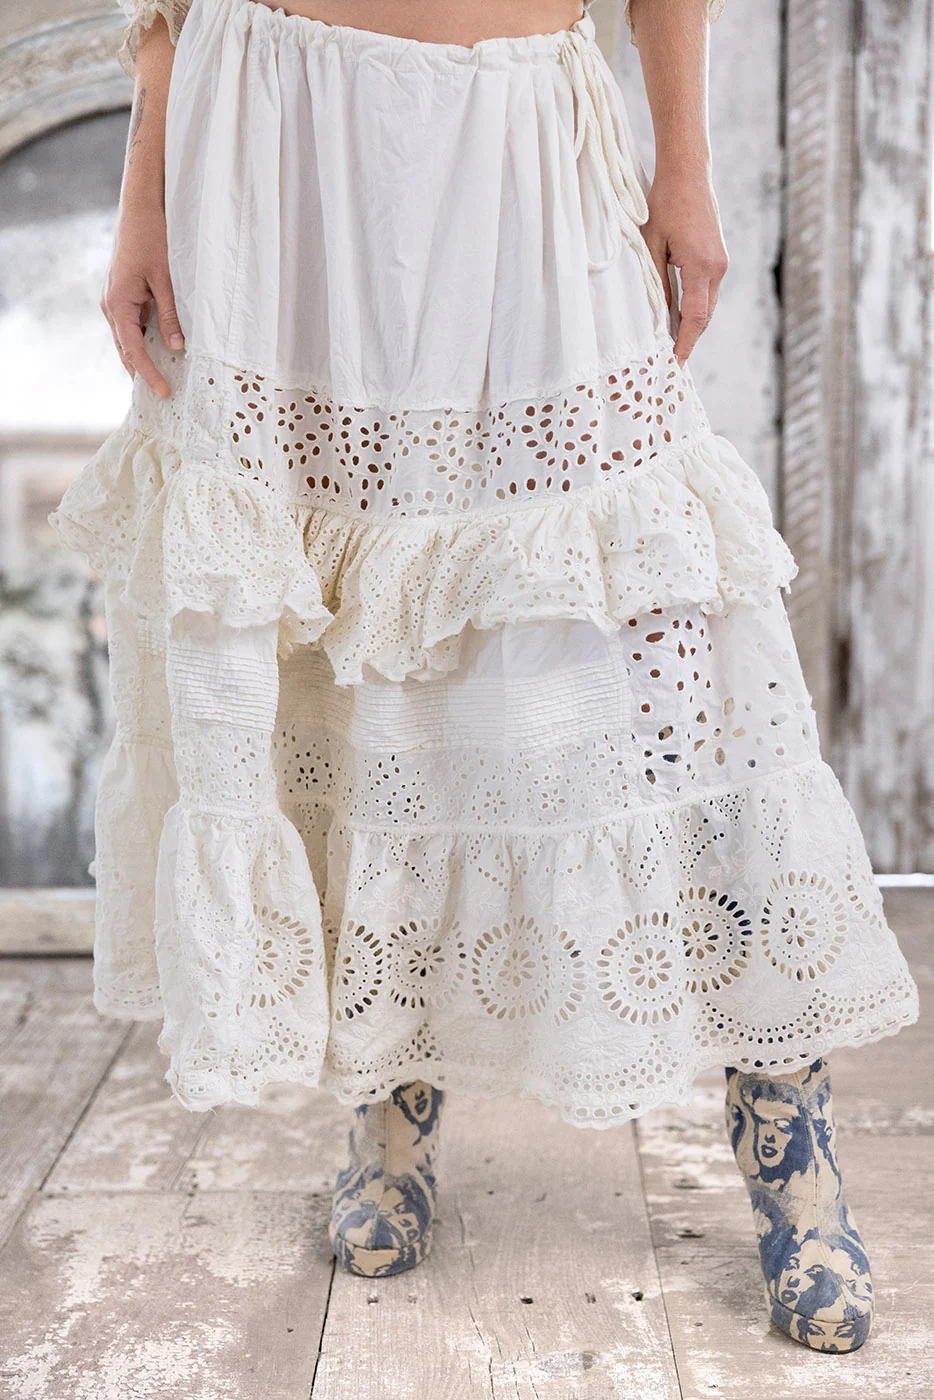 Magnolia Pearl European Cotton Eyelet Pissarro Skirt in True Skirt 197